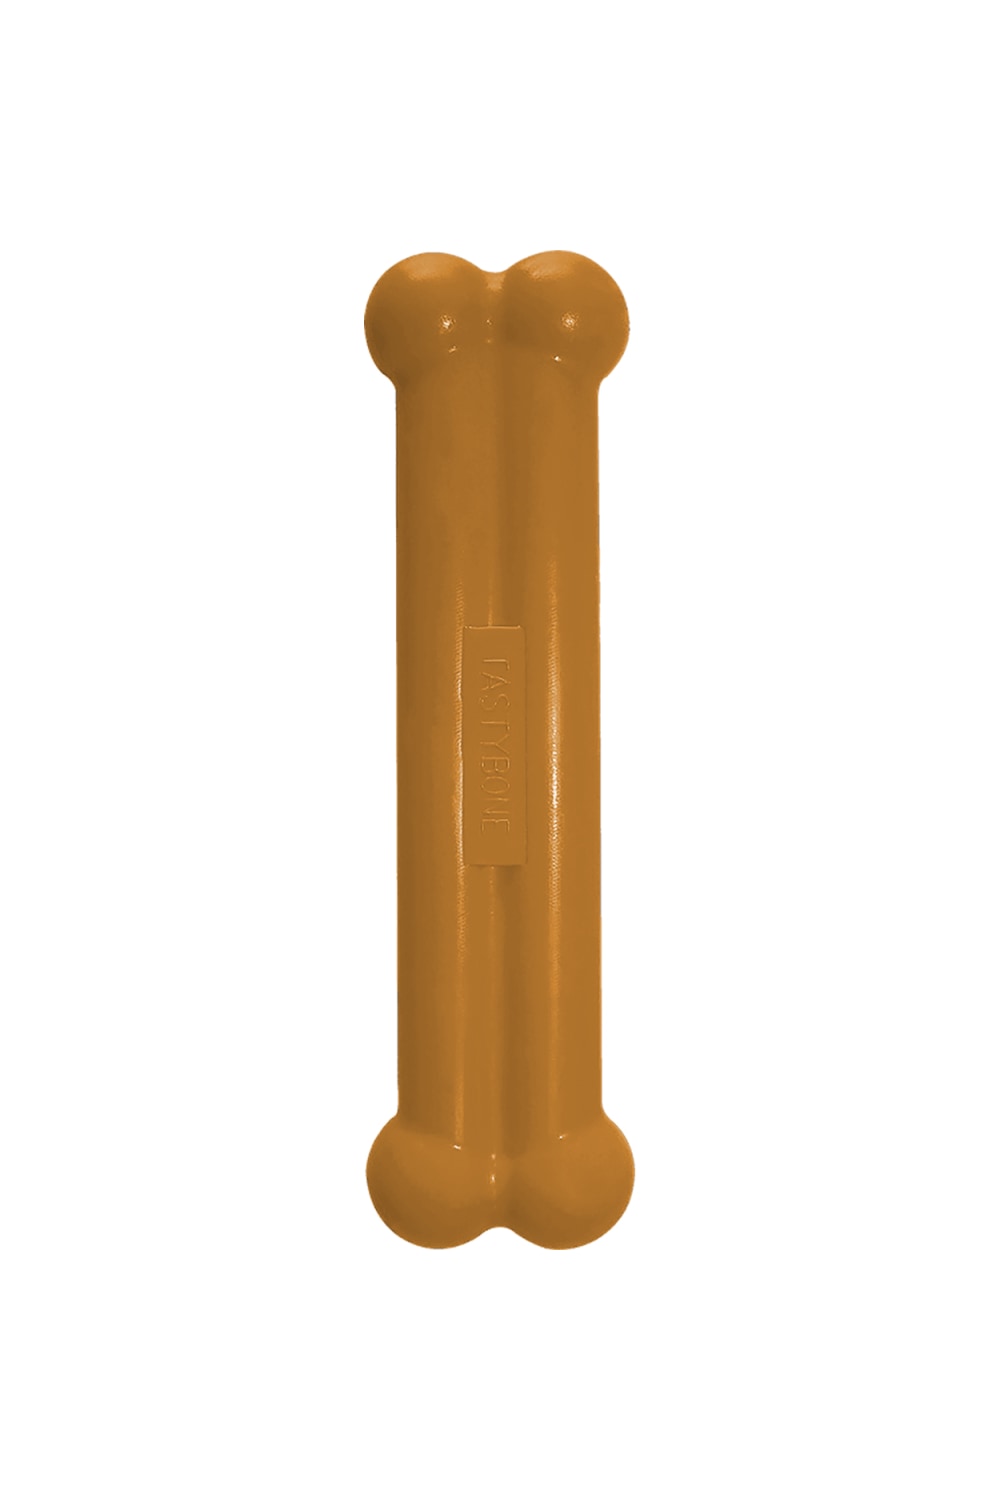 TastyBone Peanut Butter Flavored Bone Dog Chew Toy (May Vary) (Puppy)